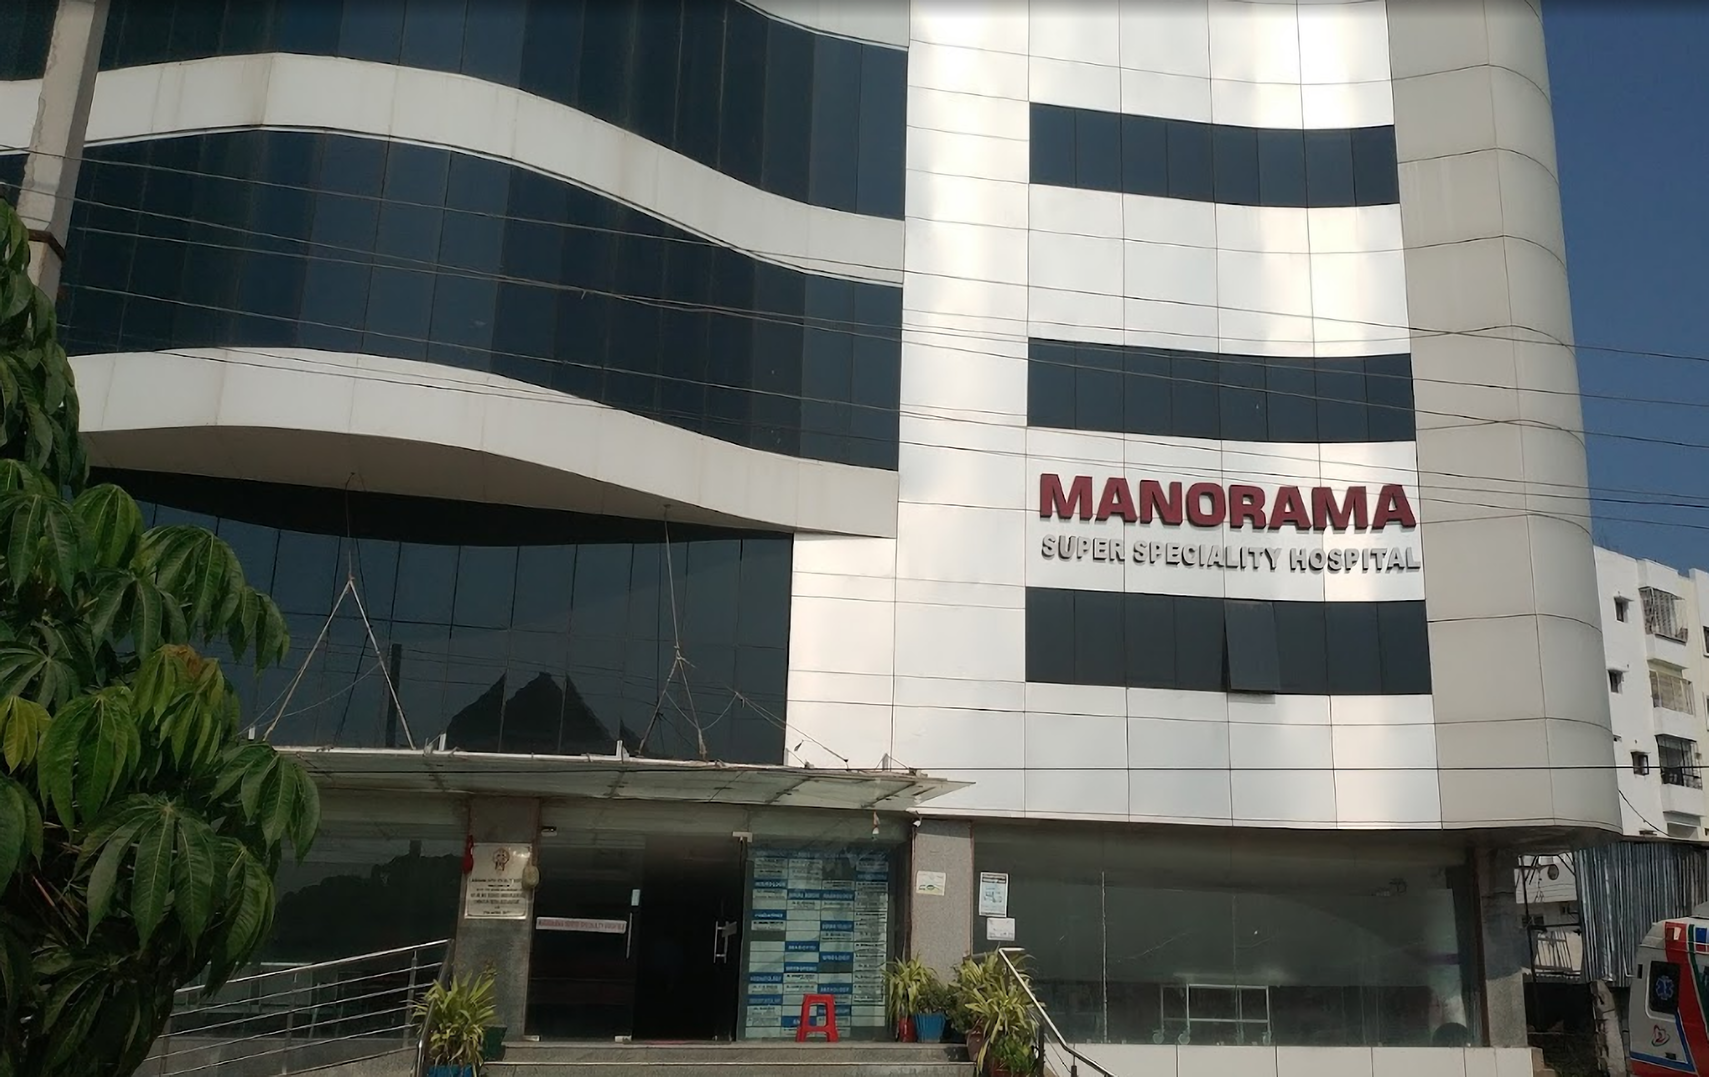 Manorama Super Speciality Hospital